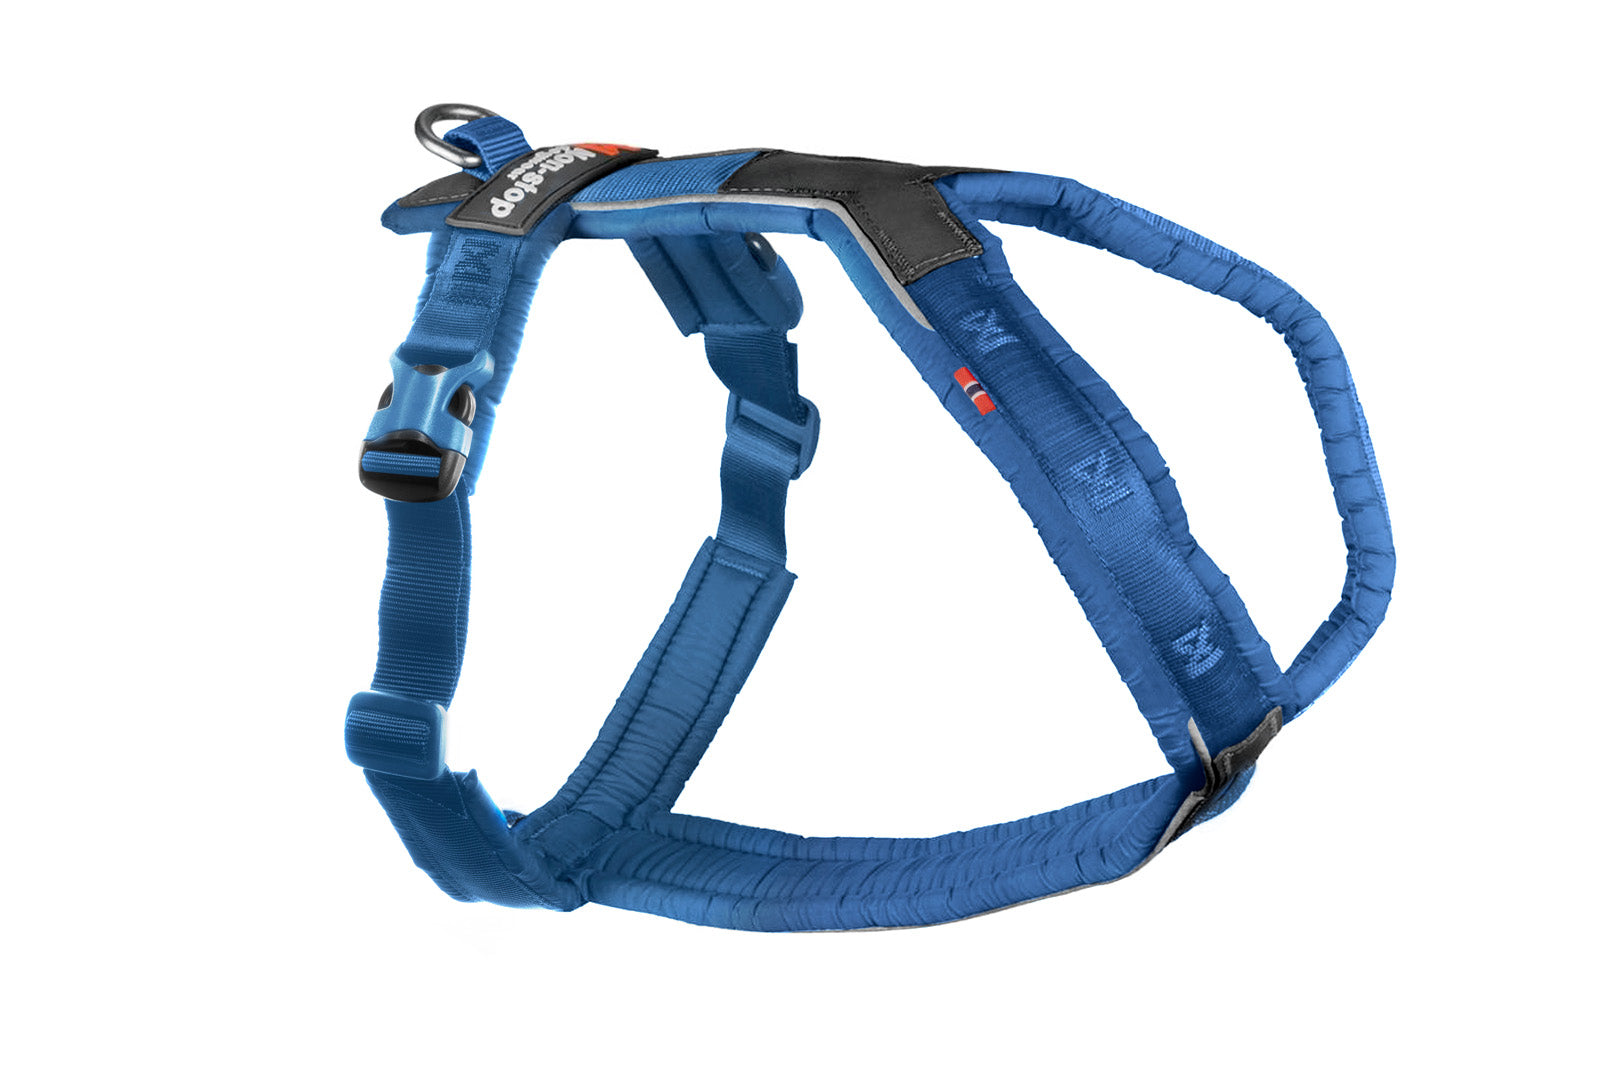 Nonstop Dogwear Line harness 5.0 Blue Blaues Fuehrgeschirr